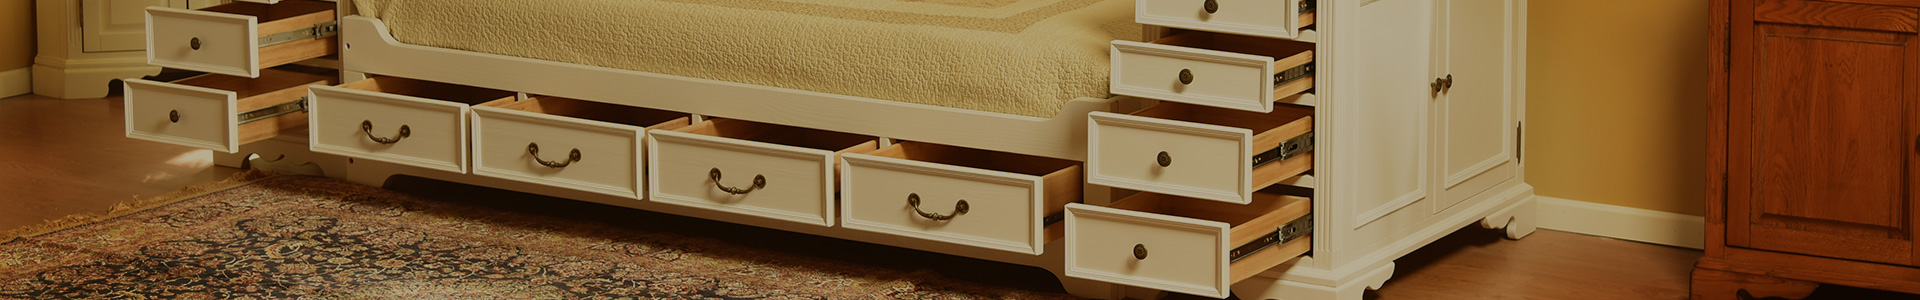 application-copper kitchen handles hot sale for cabinet wardrobe drawer Hoone-Hoone-img